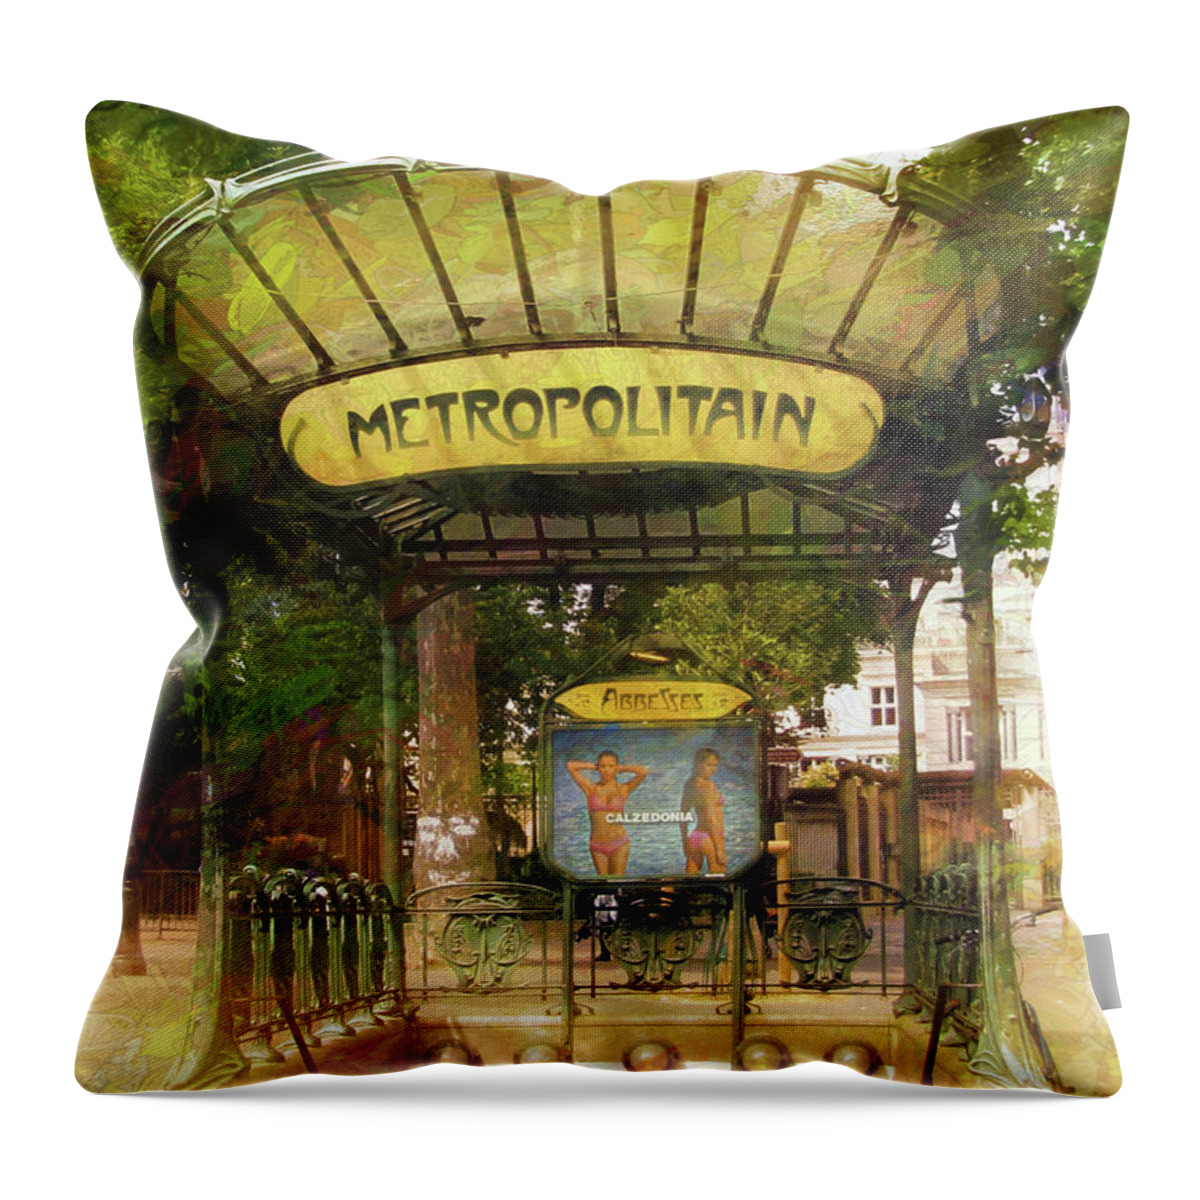 Metro Throw Pillow featuring the photograph Metropolitain by John Rivera